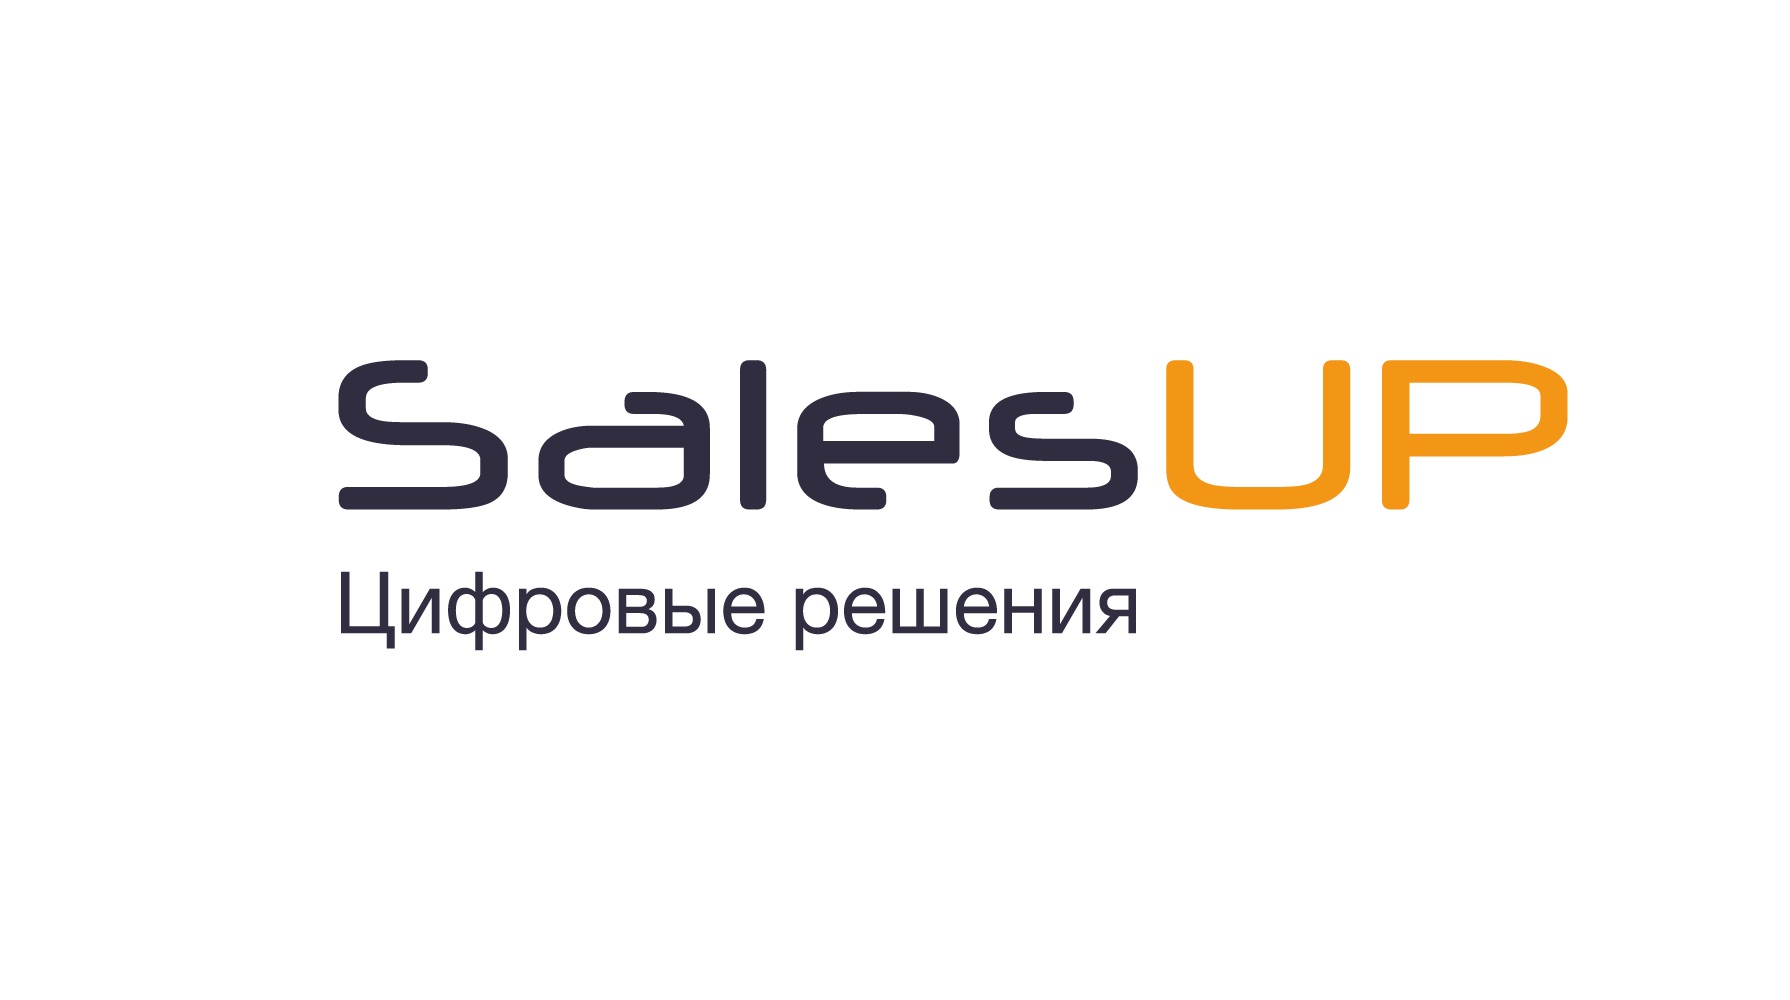 SalesUp Group